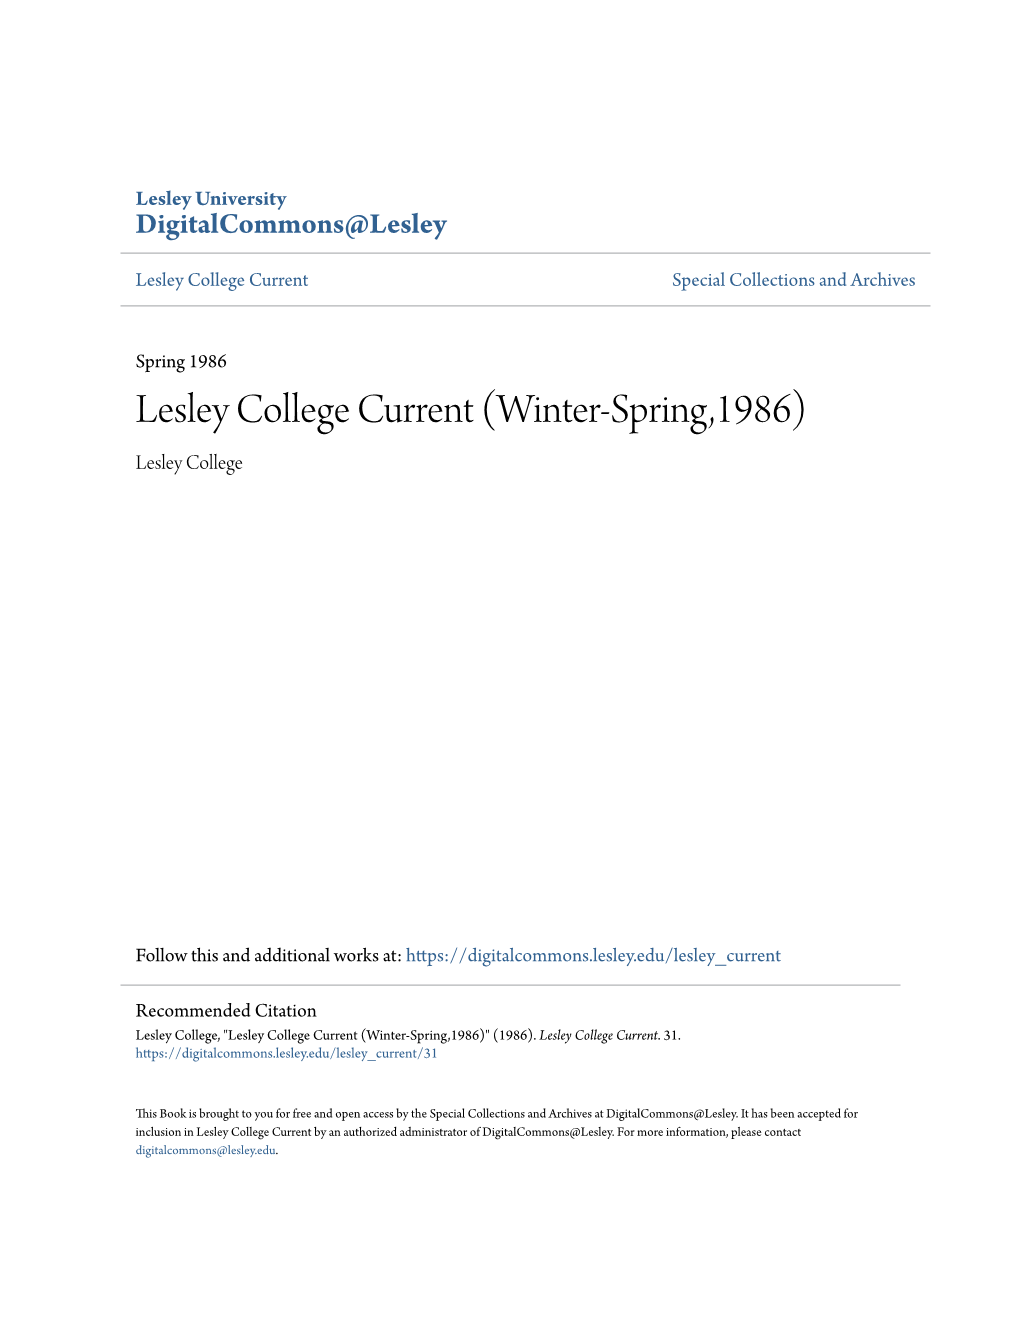 Lesley College Current (Winter-Spring,1986) Lesley College